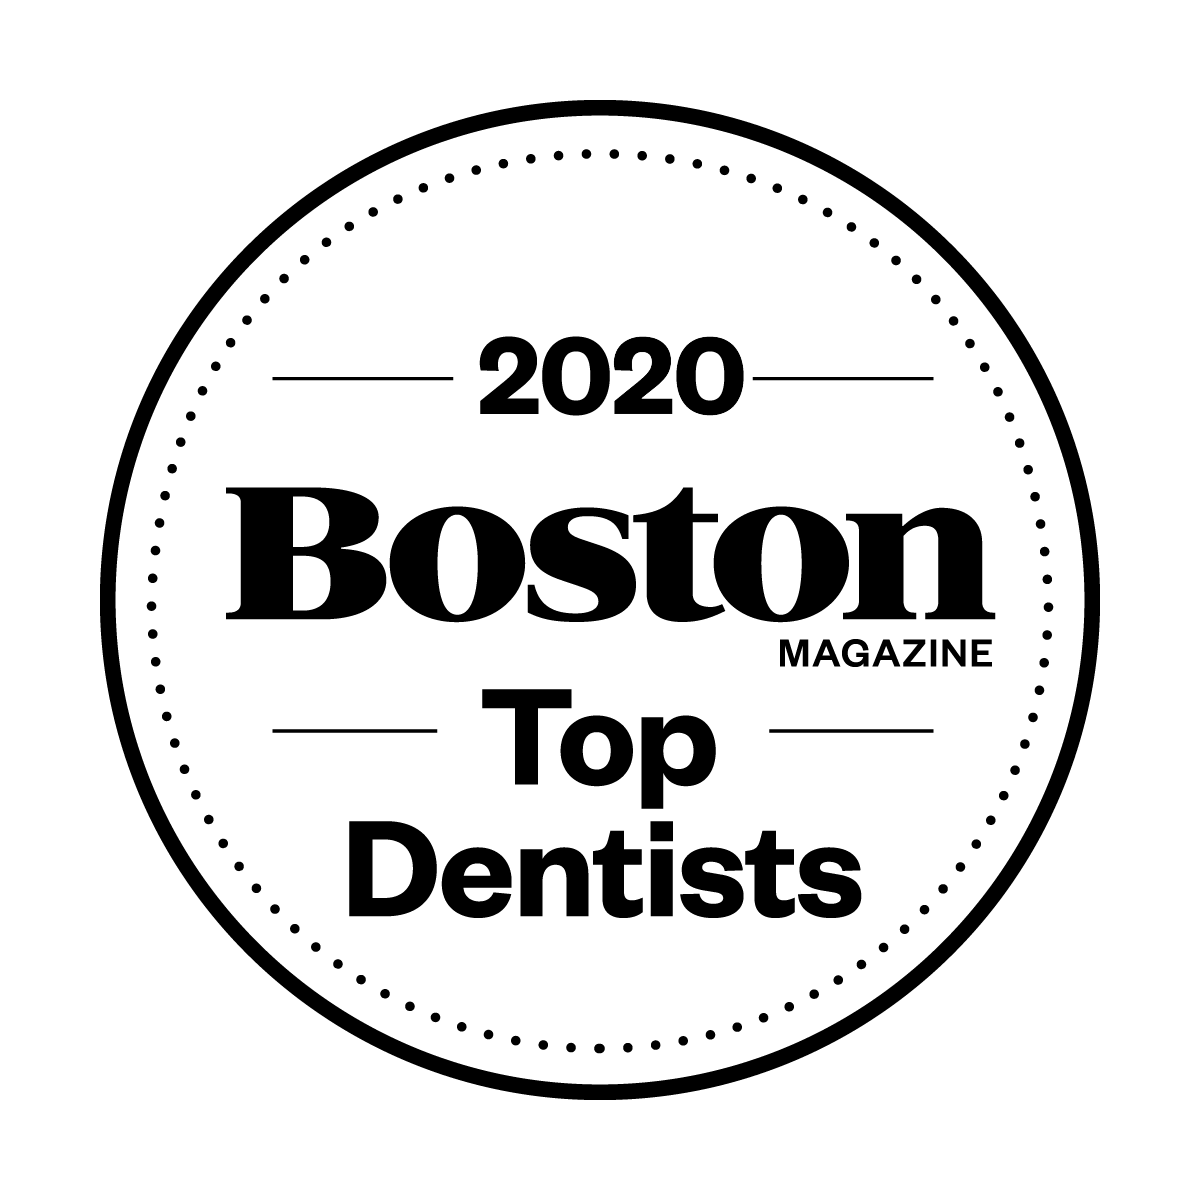 Boston Top Dentists